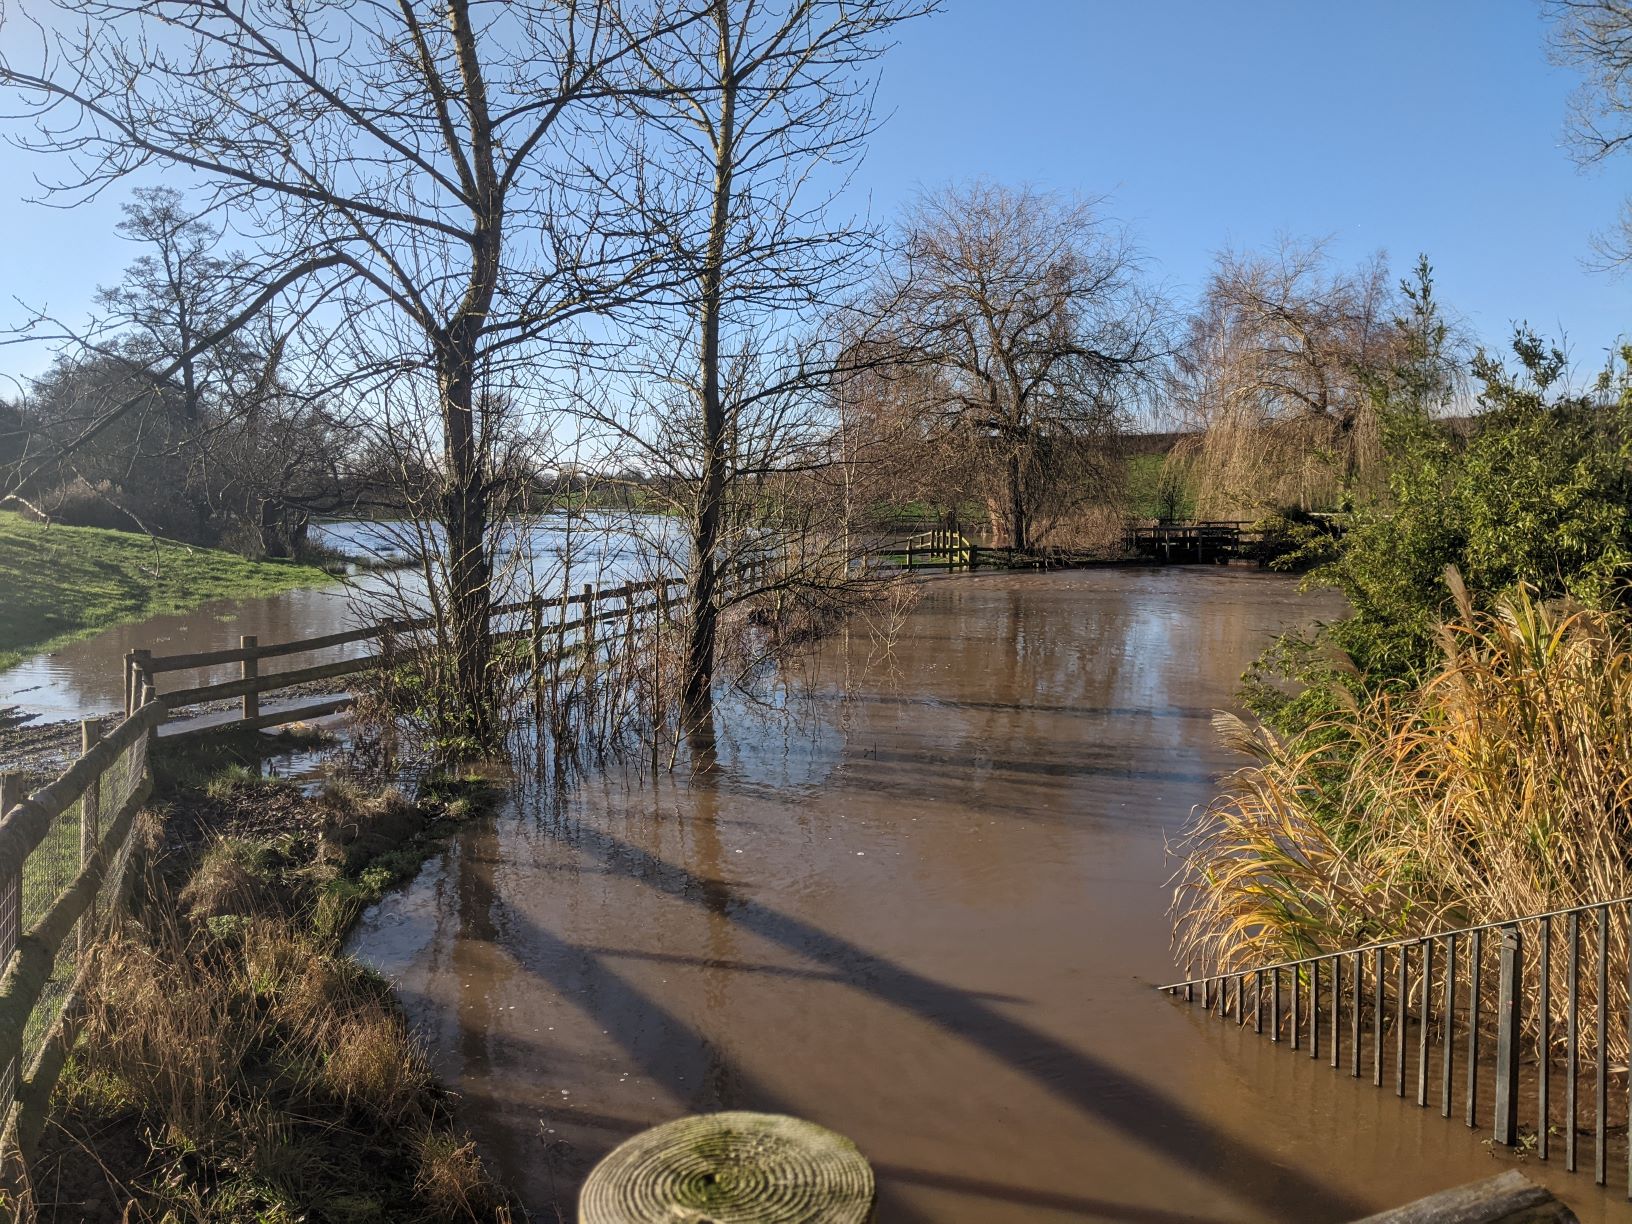 Flooding near Hankelow Mill, December 27th